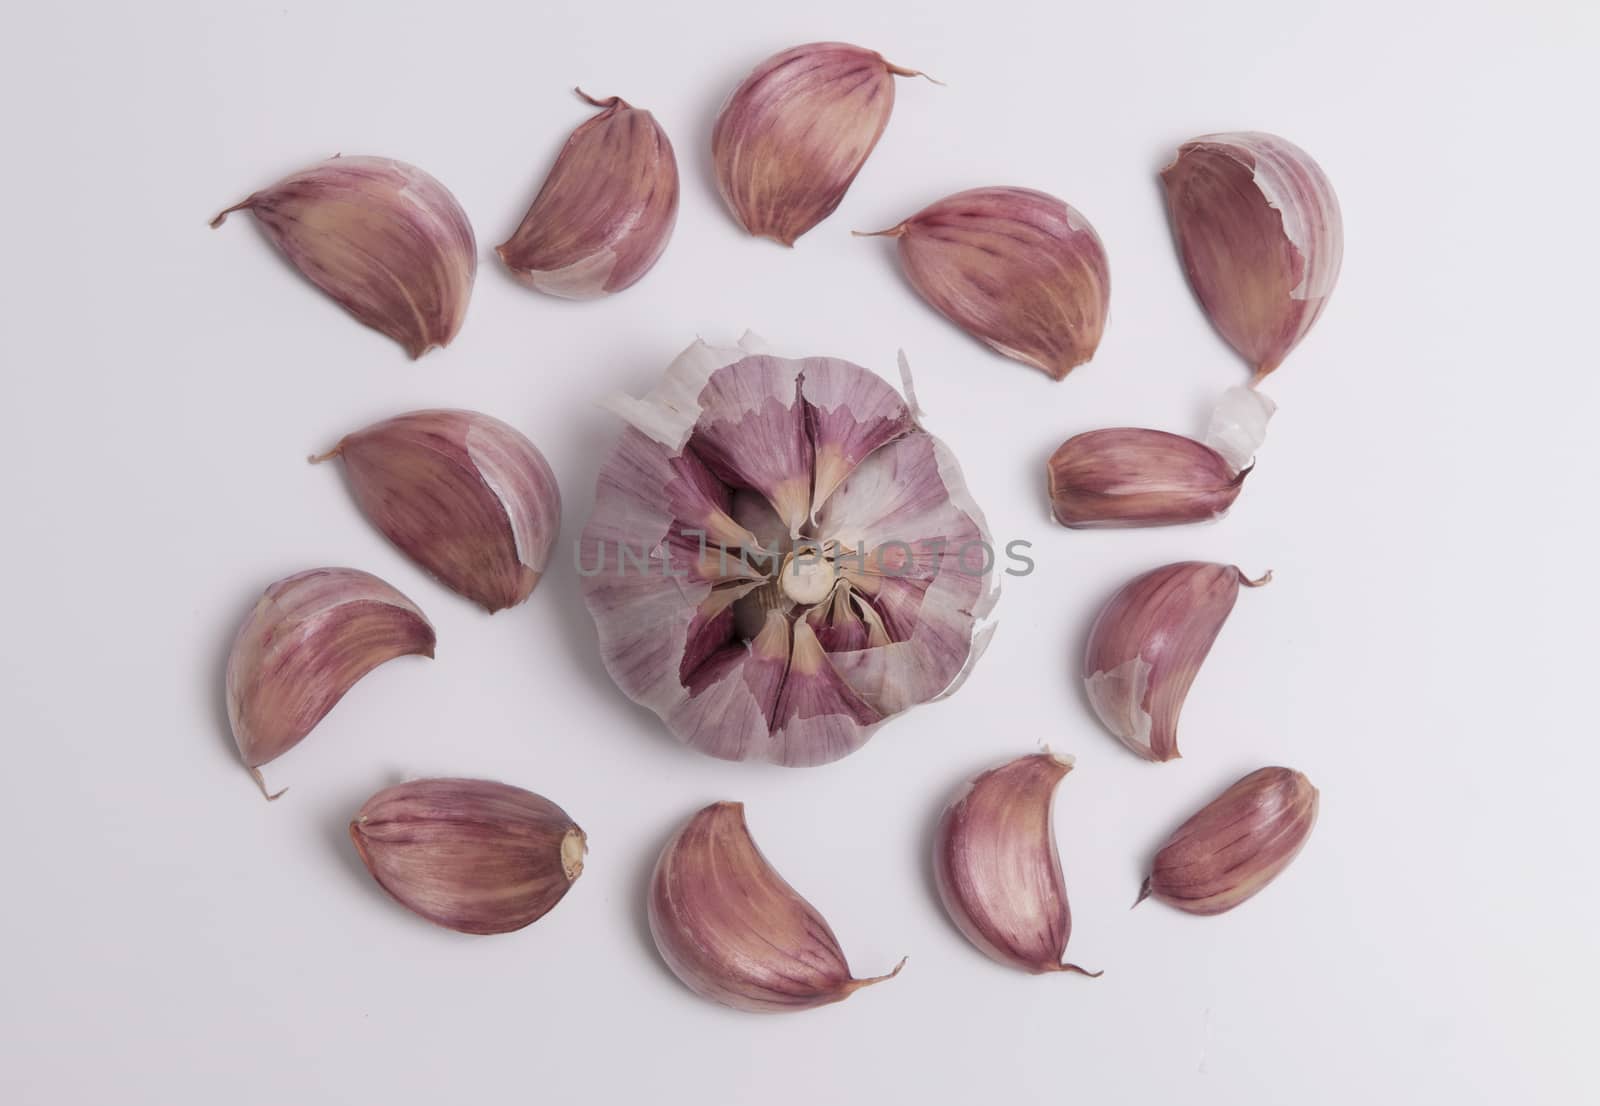 Garlic Bulb and a Individual Cloves by rodrigobellizzi